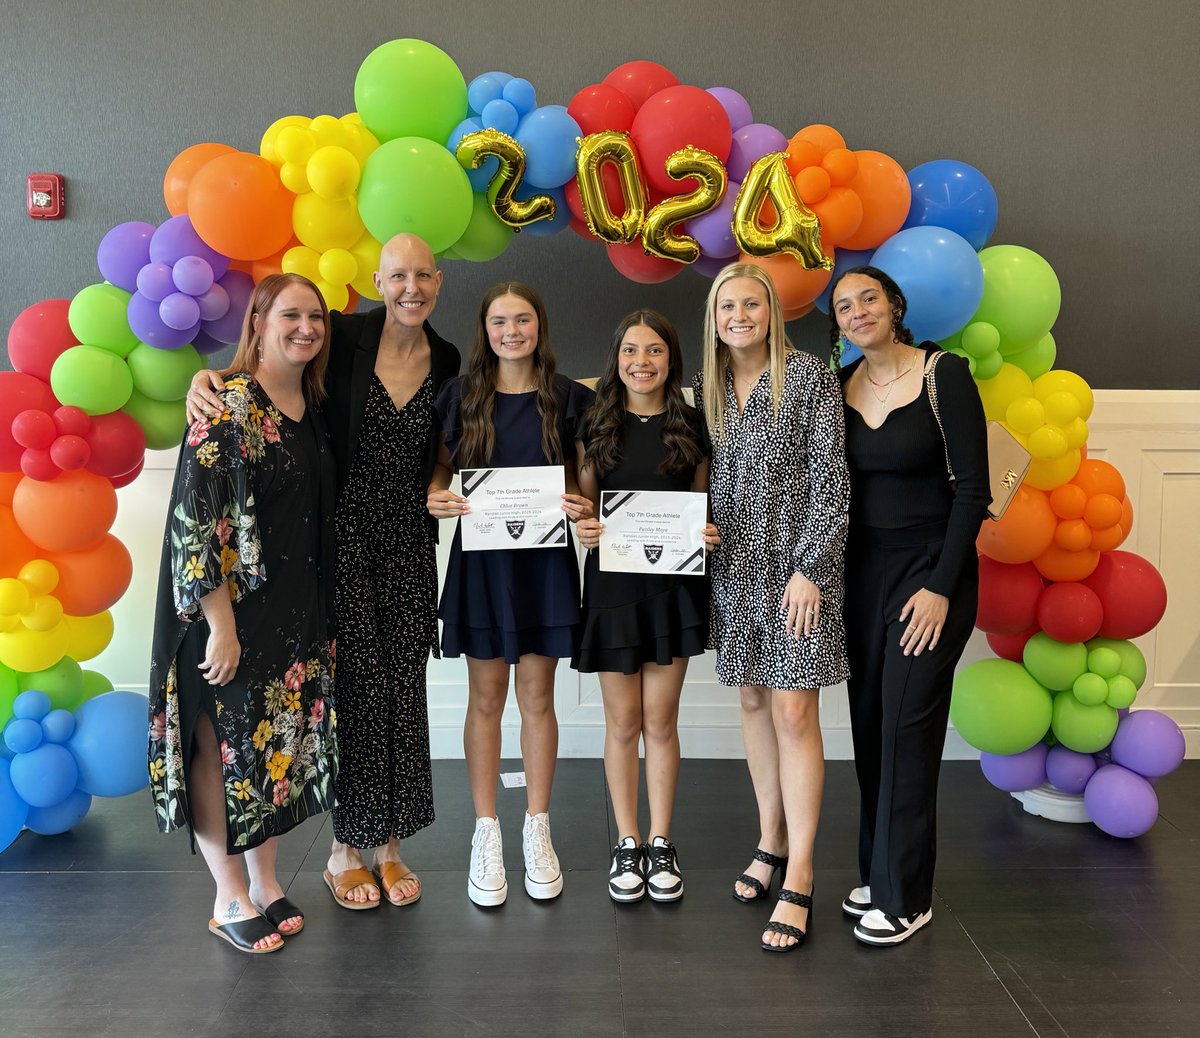 Super proud of these girls!! 🤩🖤
Top 7th Grade Athletes - Chloe Brown & Paisley Moya 
Top 8th Grade Athletes - Khloe Acosta & Reese Haggard 
#multisportathlete @RJHRaiders